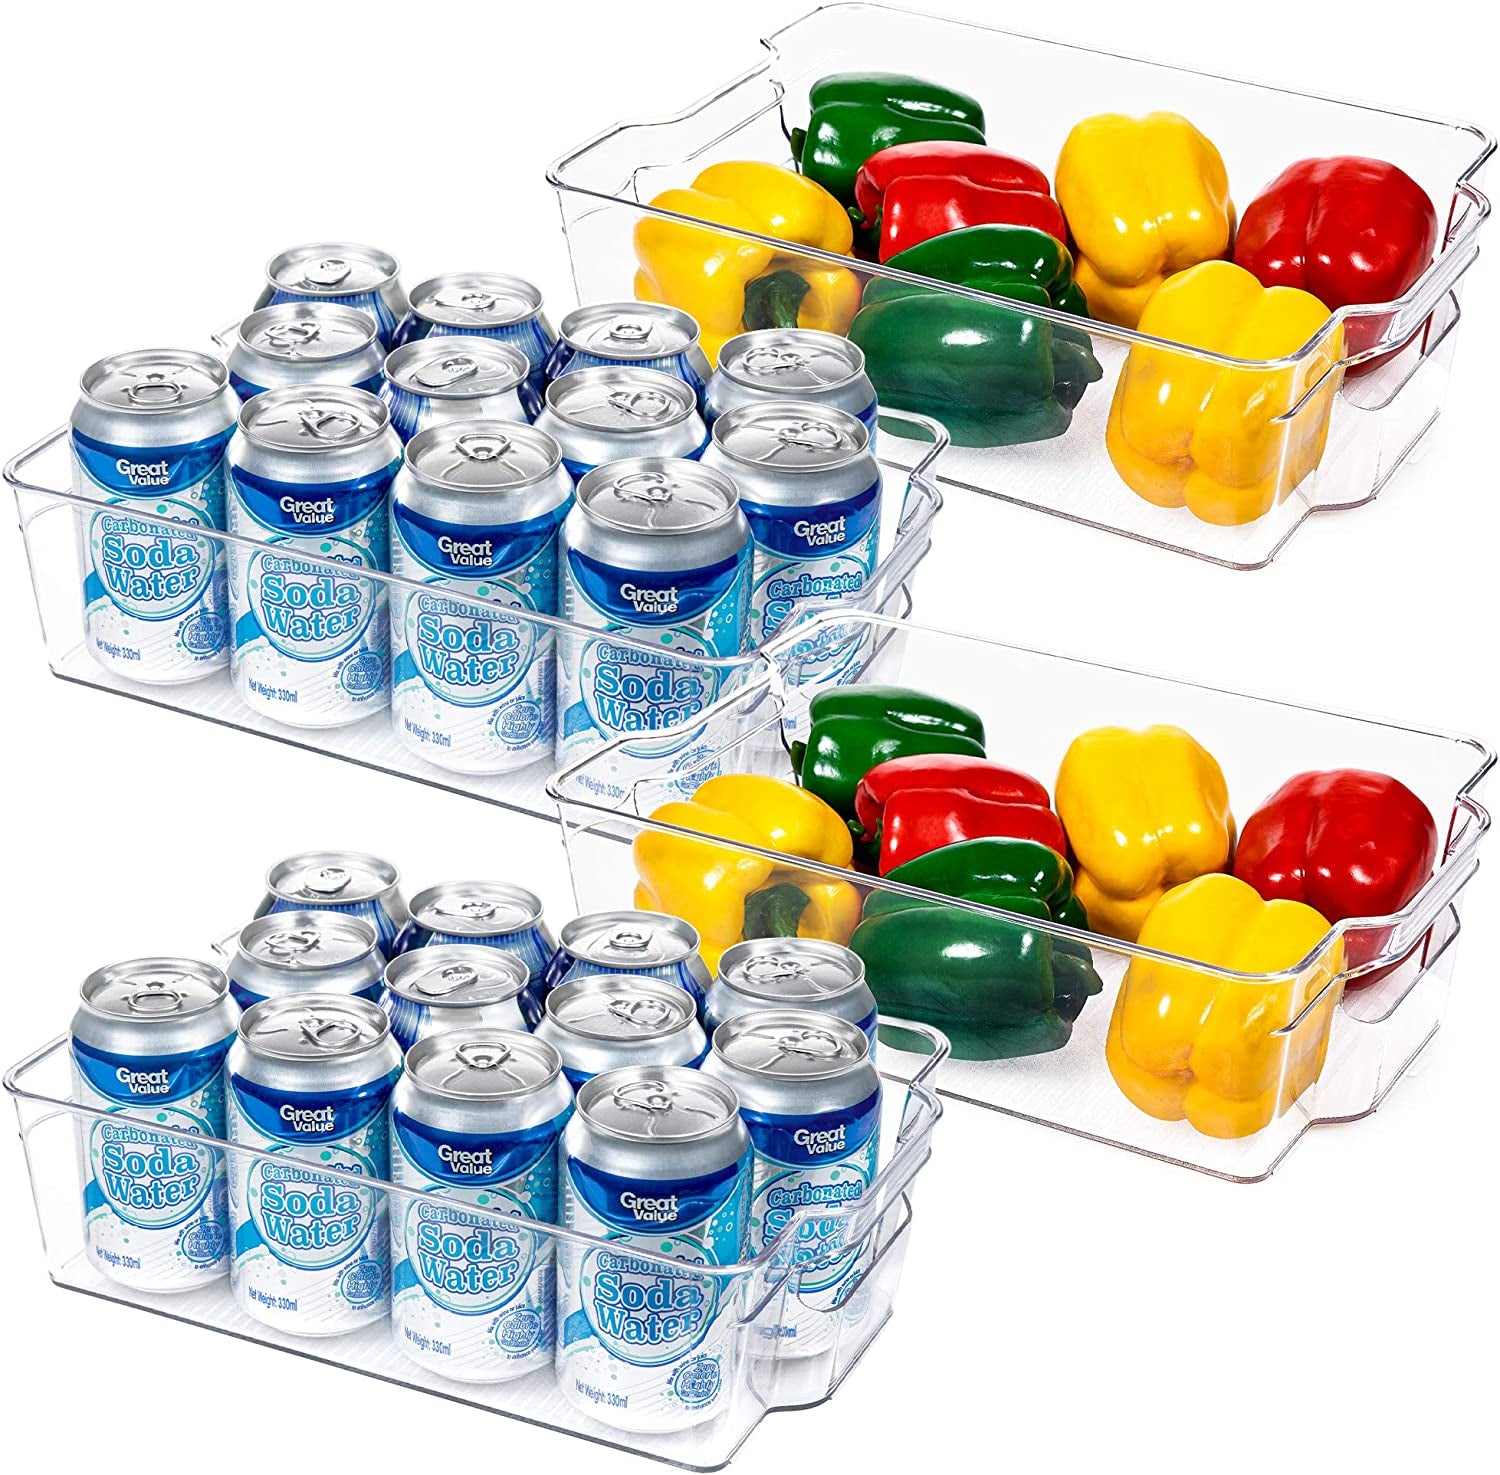 Refrigerator Organizer Bins - 8Pcs Clear Plastic Bins for Fridge, Freezer, Kitchen Cabinet, Pantry Organization, BPA Free Fridge Organizer, 12.5" Long, Clear